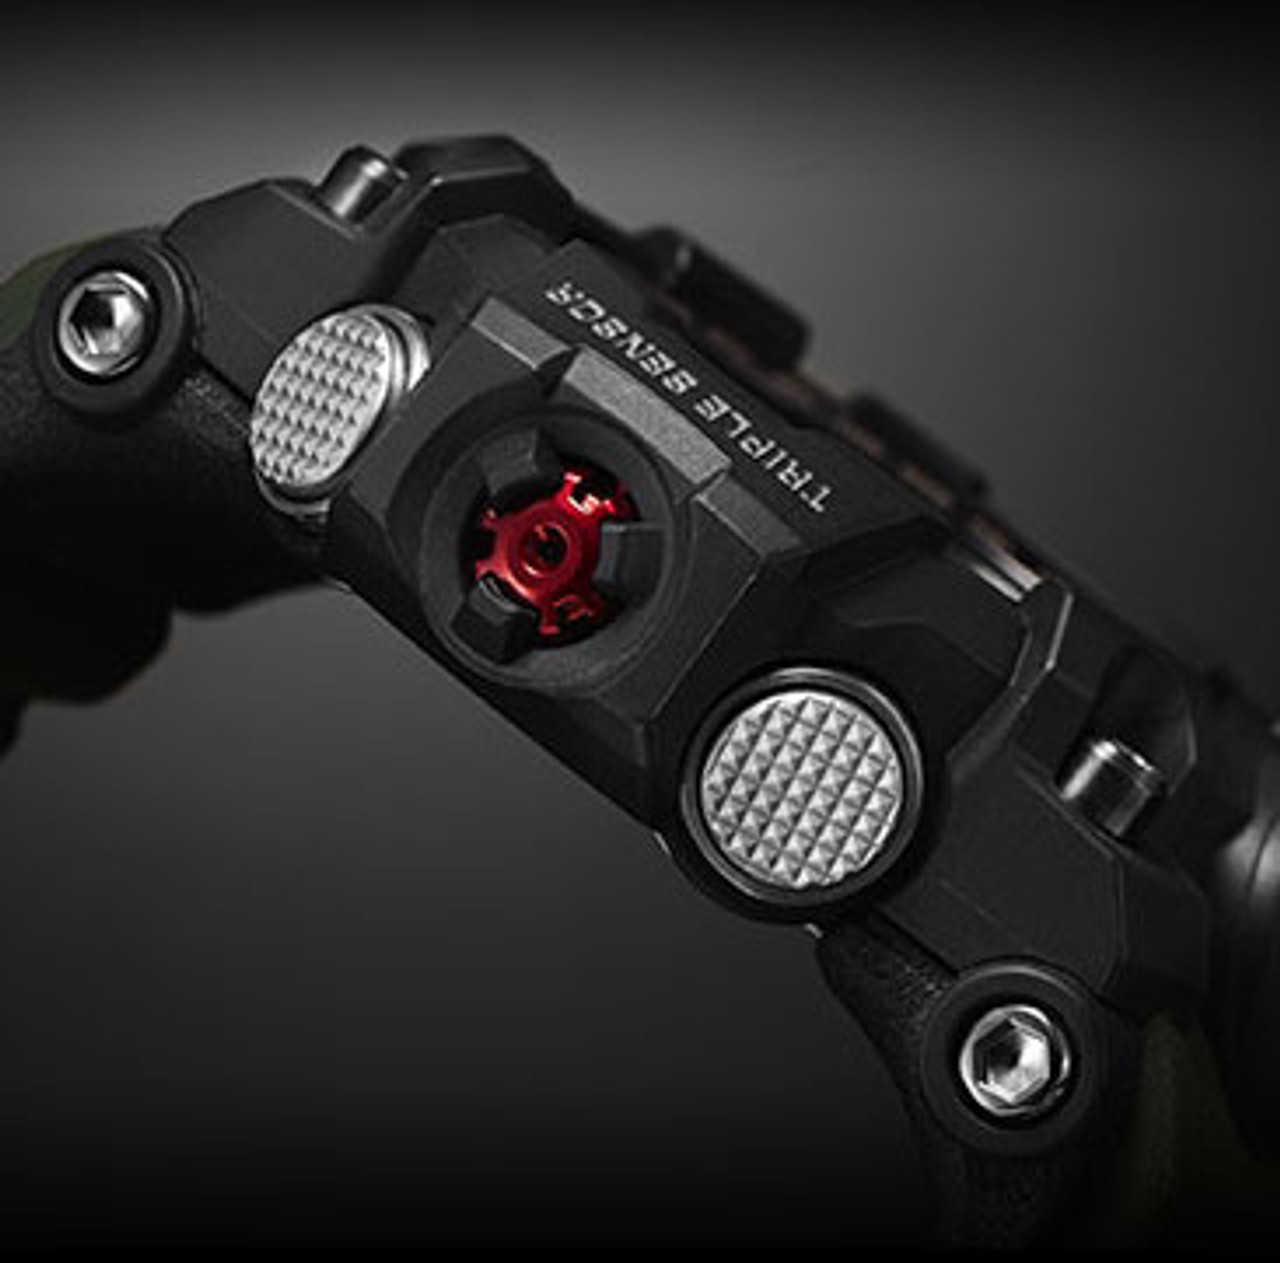 Casio G-Shock Mudmaster GWG-1000-1A3ER Triple Sensor Watch